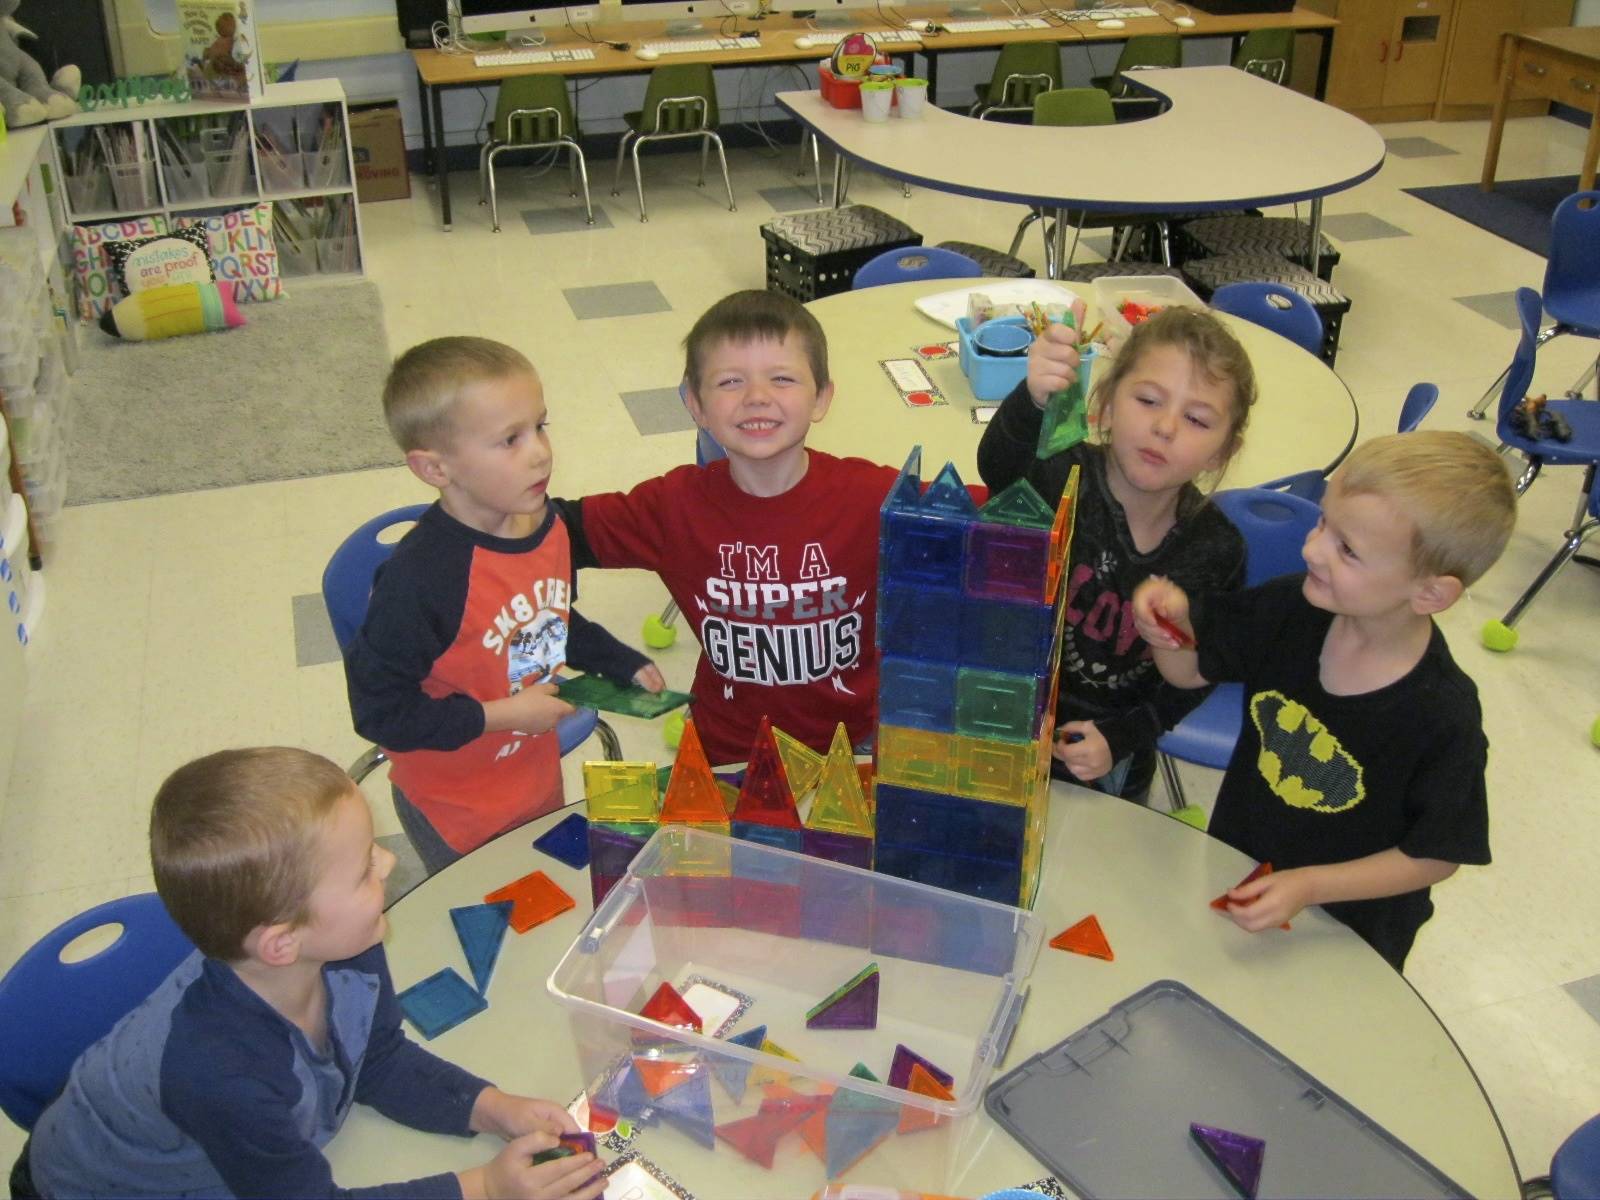 5 kindergarteners build together.